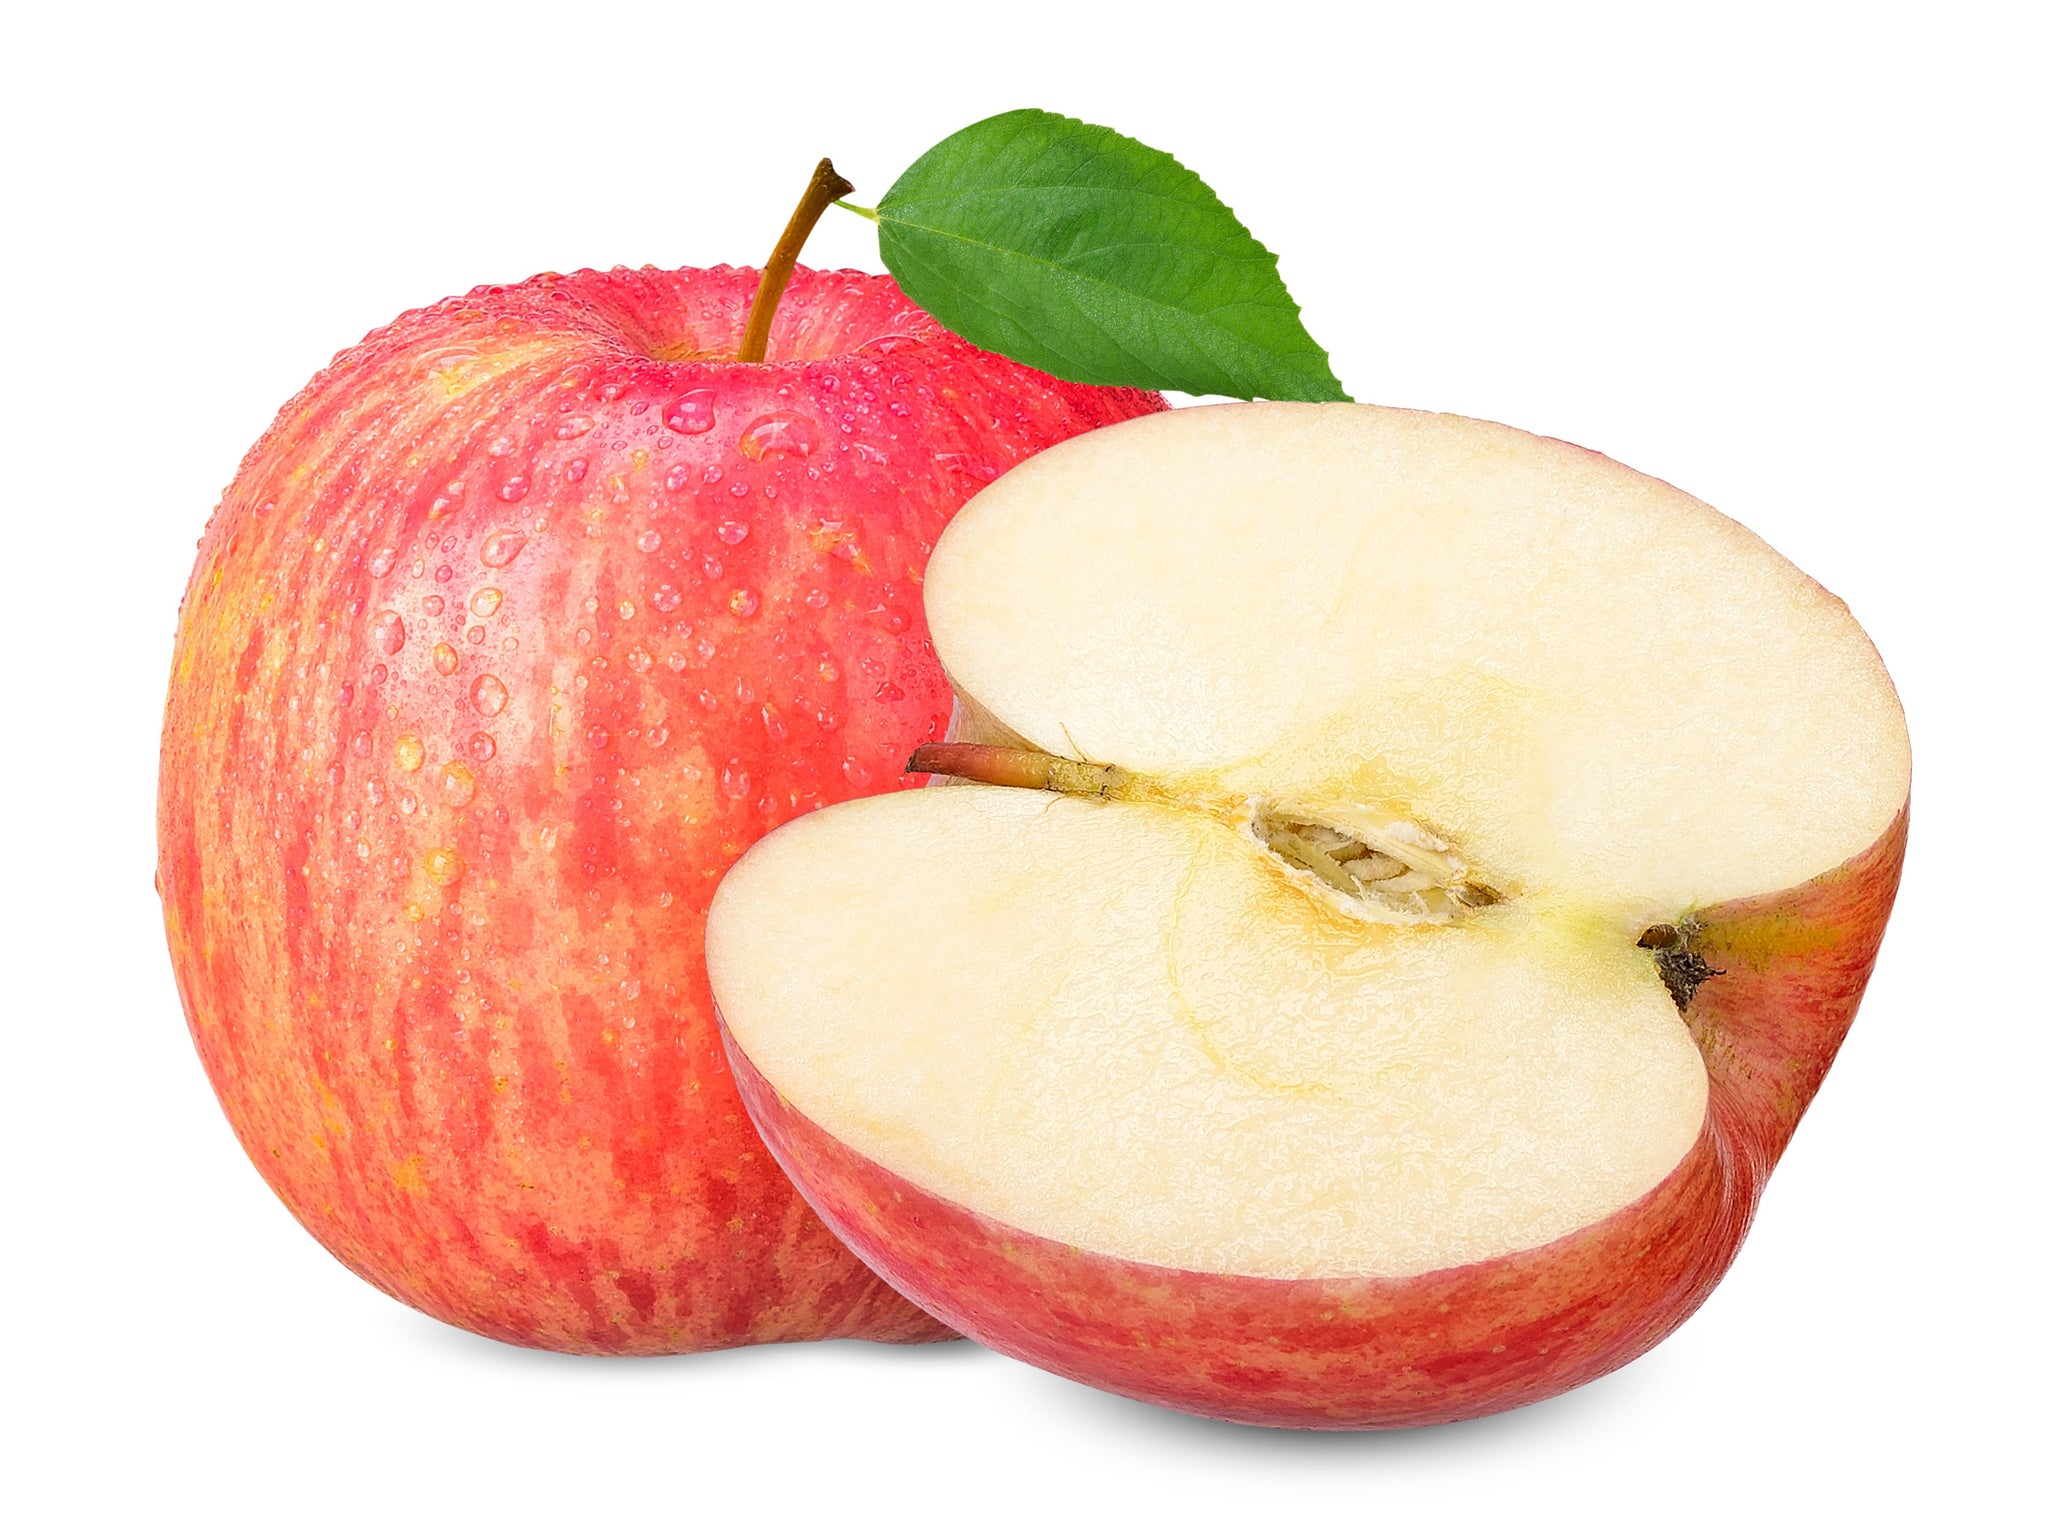 gre>Kroger Fuji Apples - Small - 1 Apple